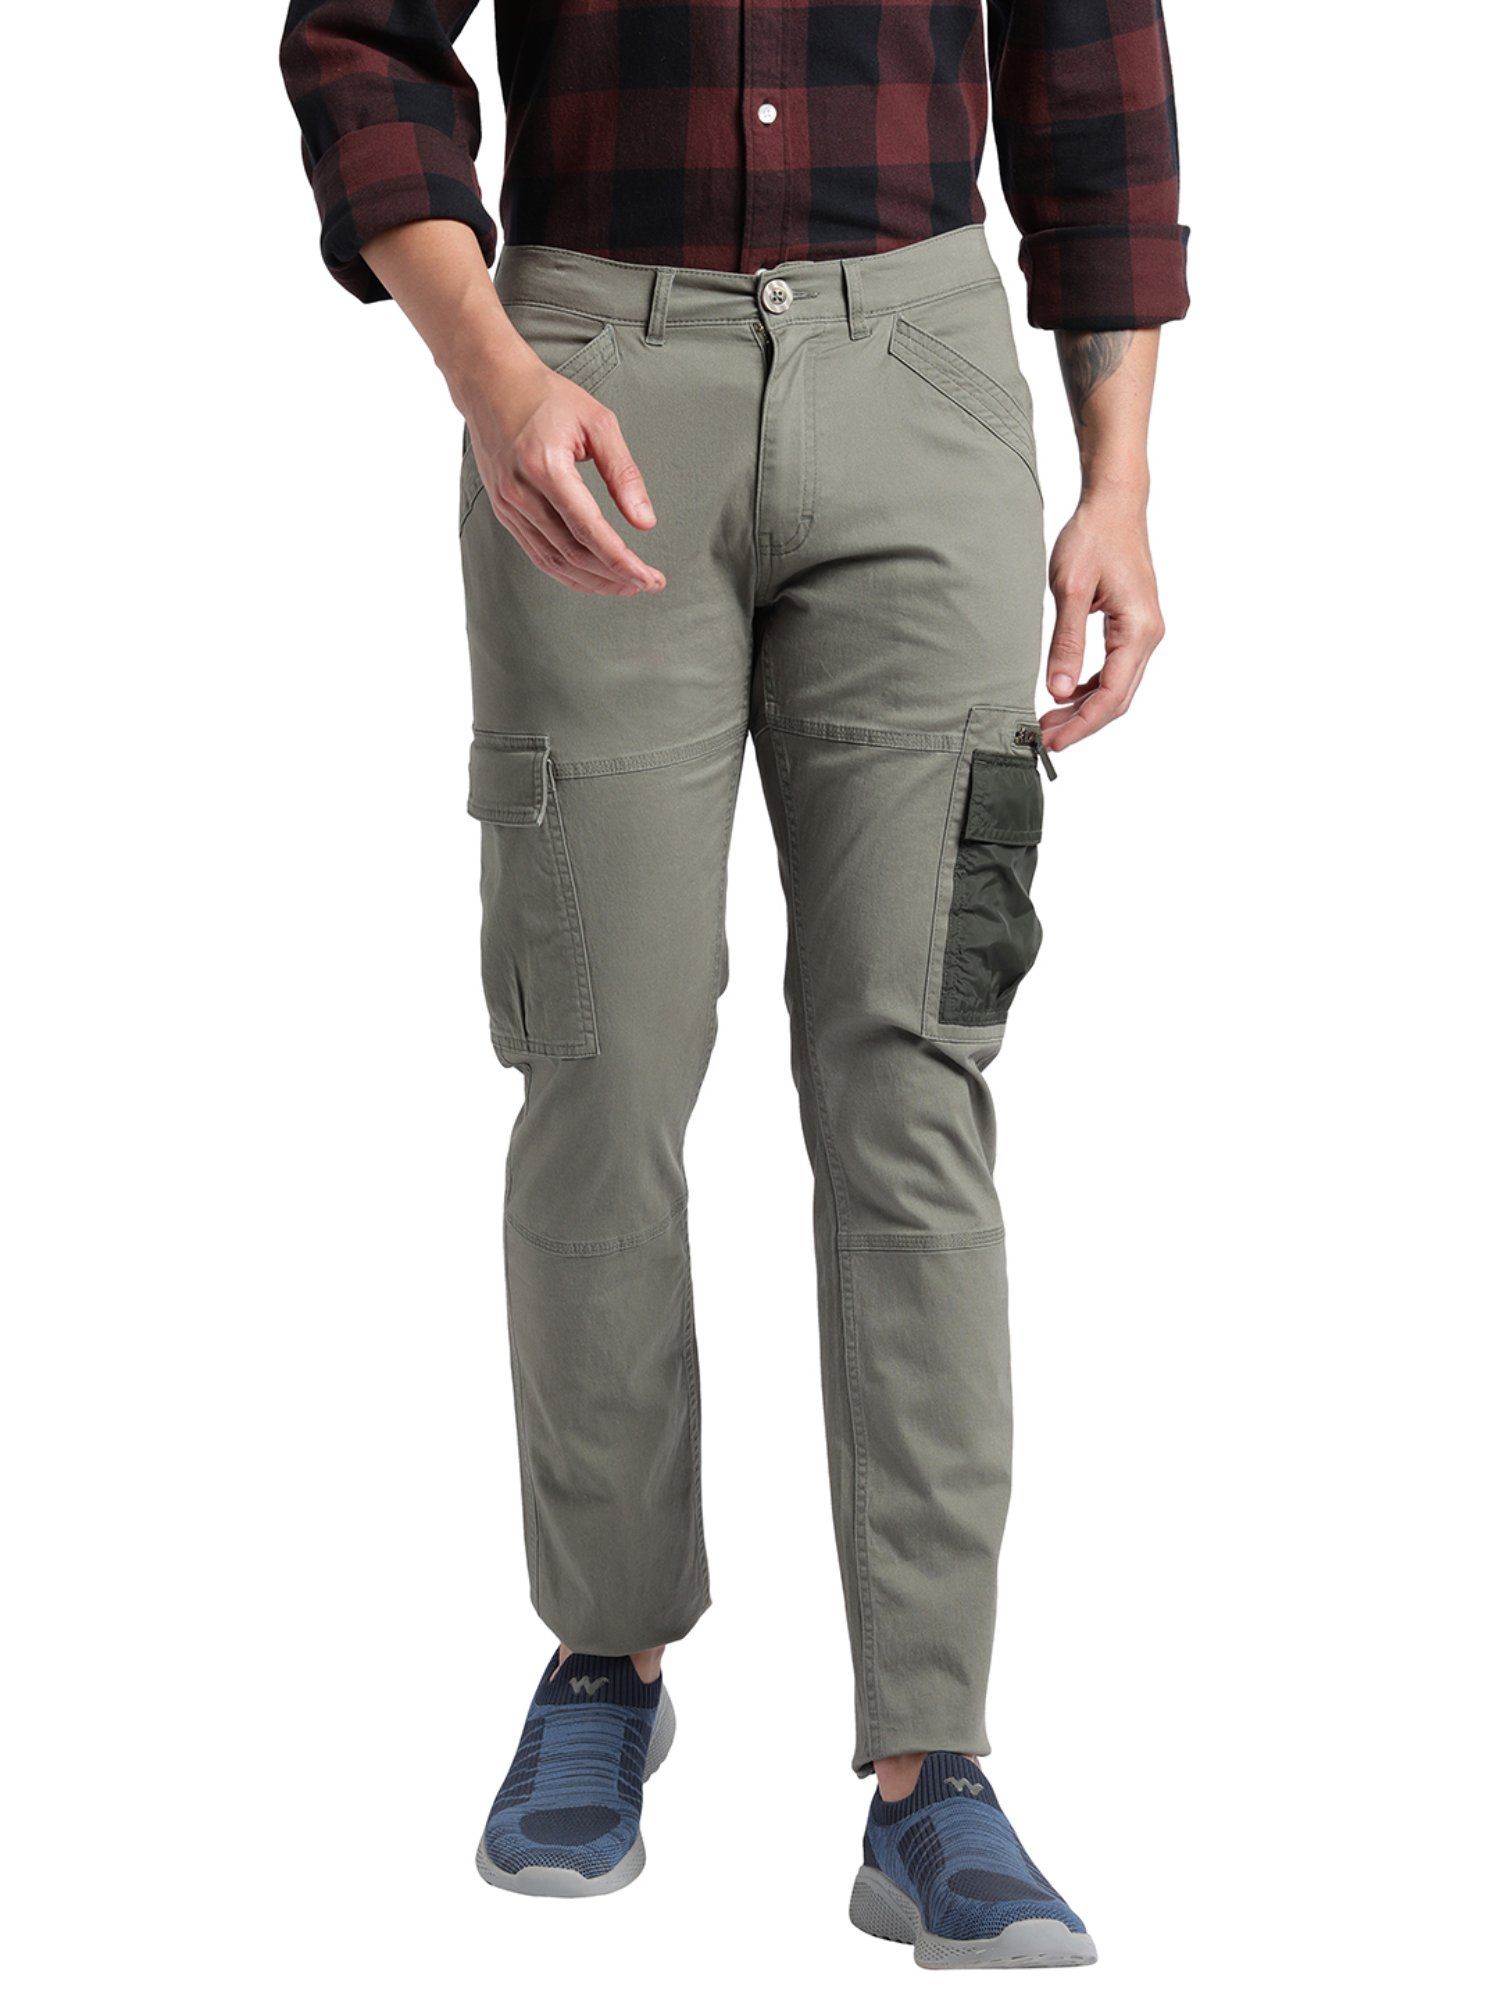 t-base Olive Solid Cargo Pant for Men Online India